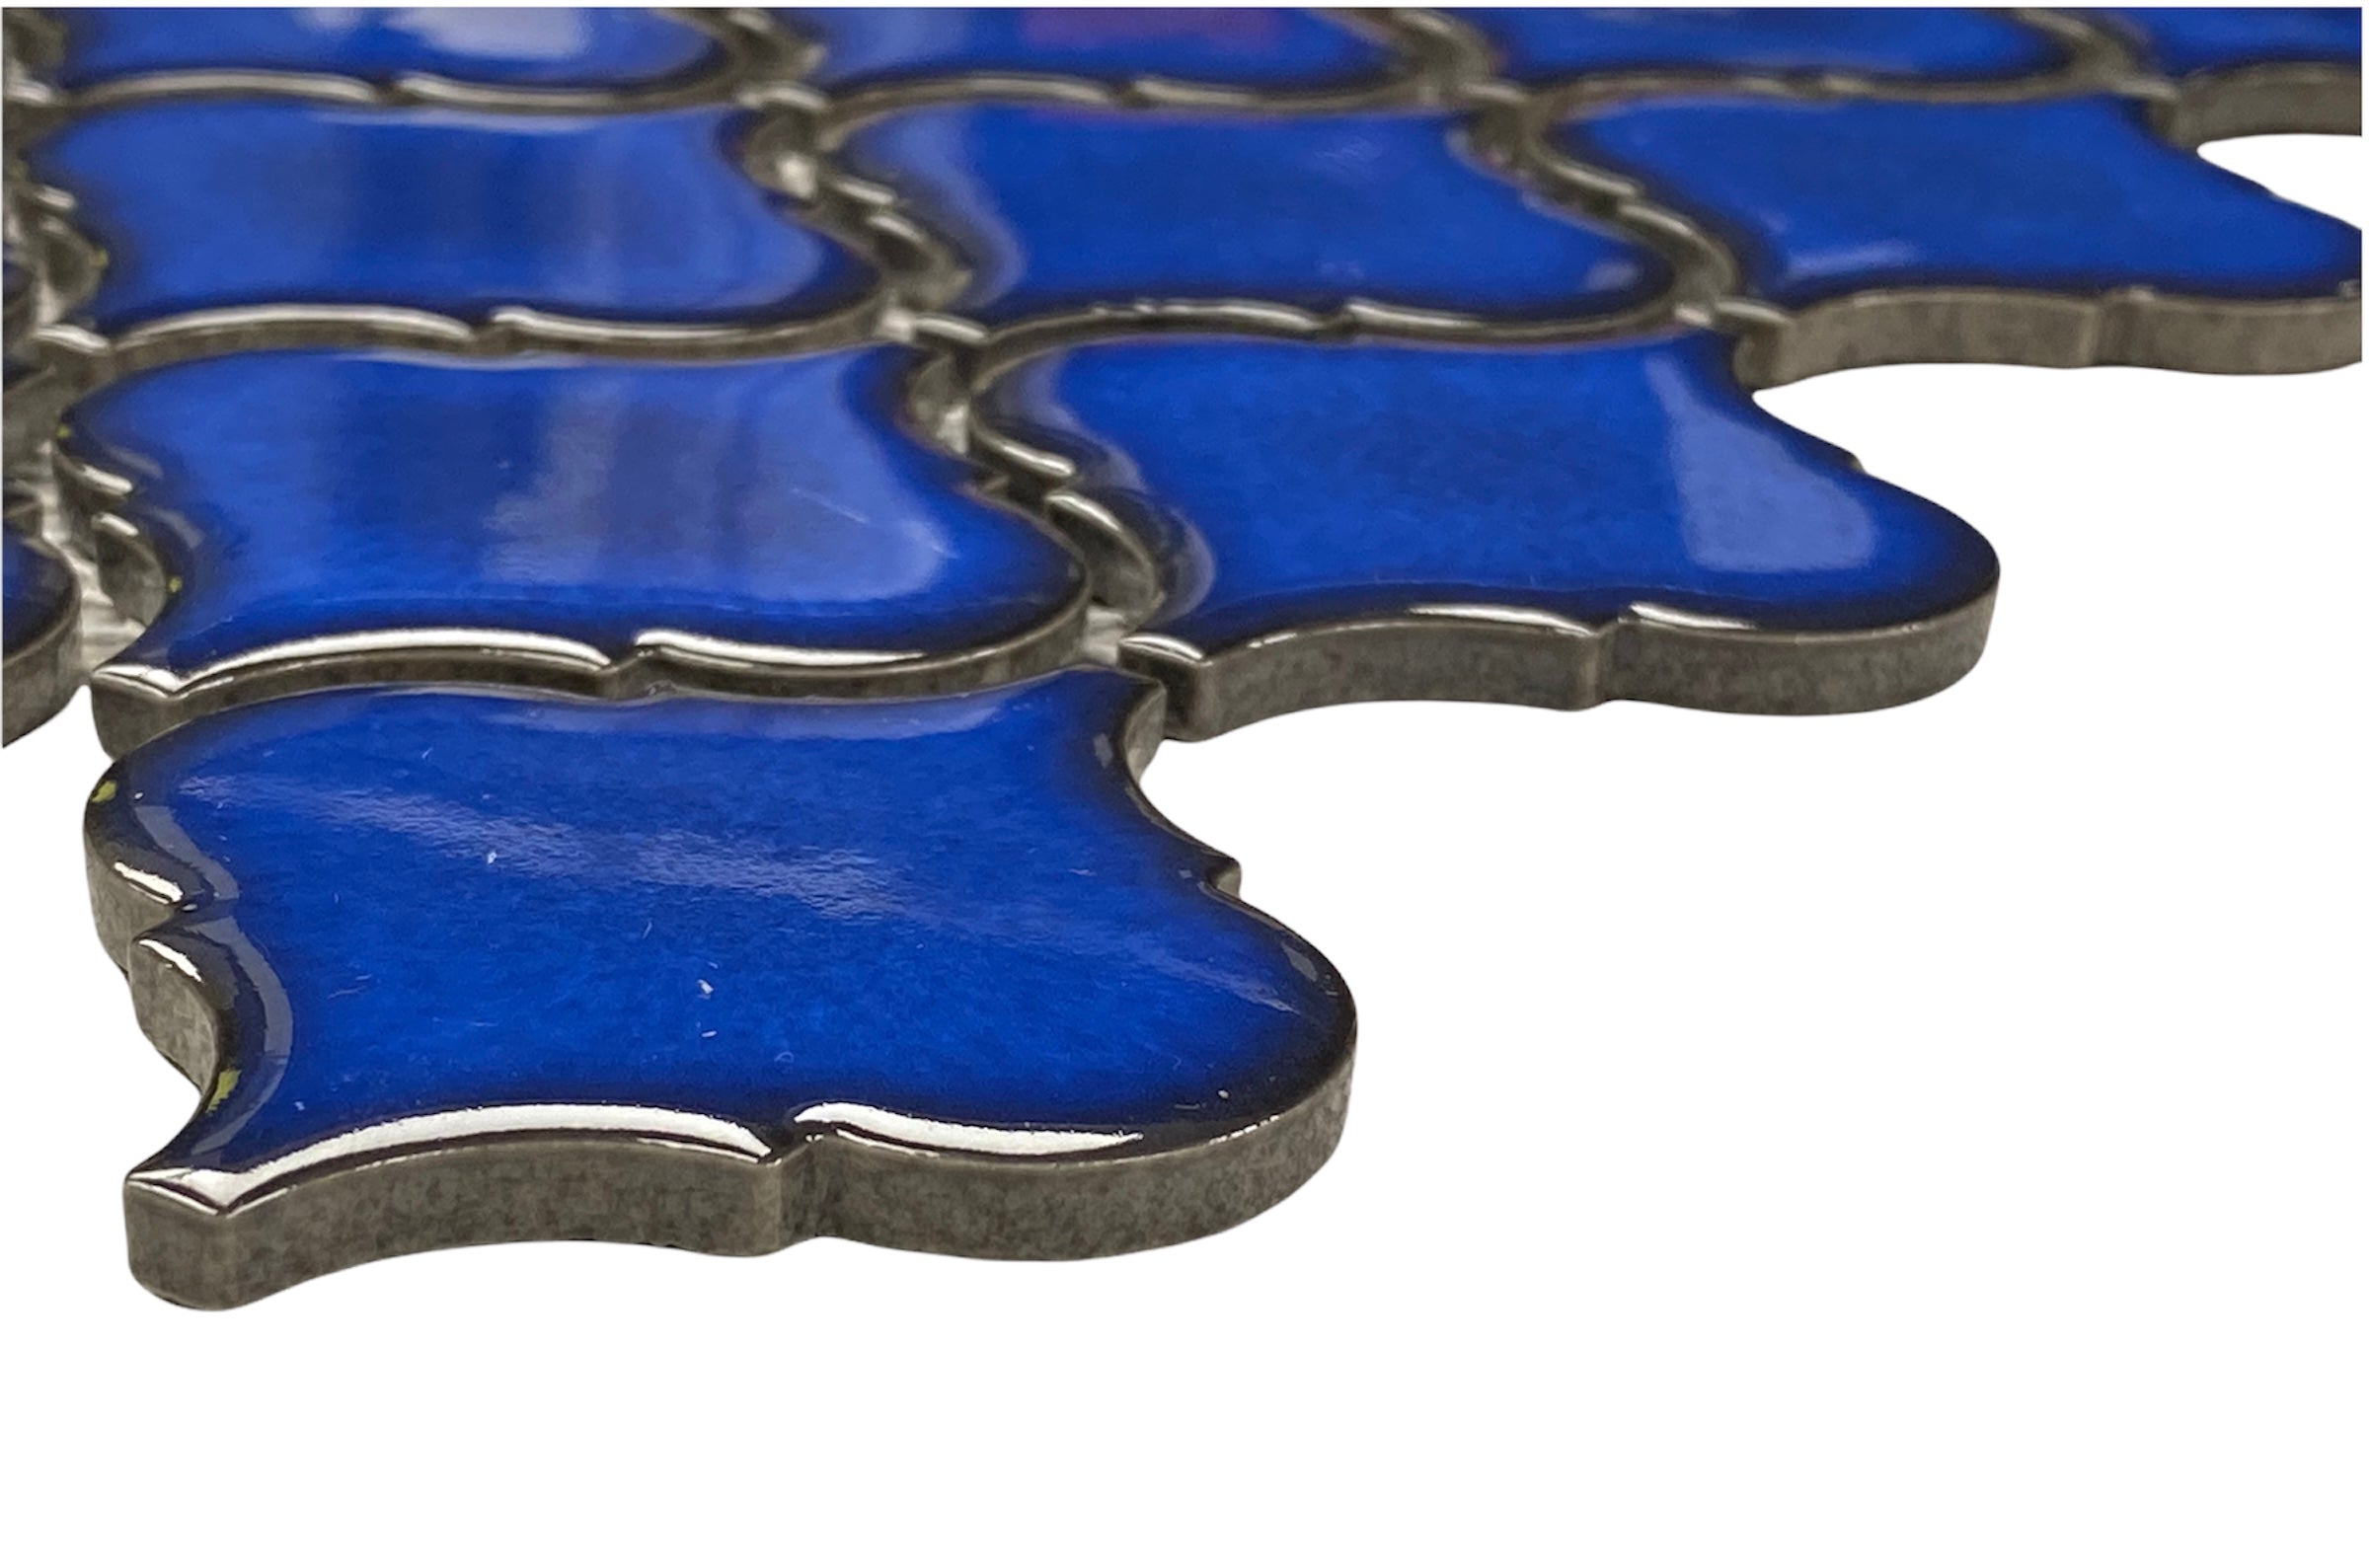 Tenedos Premium Cobalt Blue 2 Inch Lantern Glossy Porcelain Mosaic Tile for Kitchen Backsplash Bathroom Wall Pool Tiles